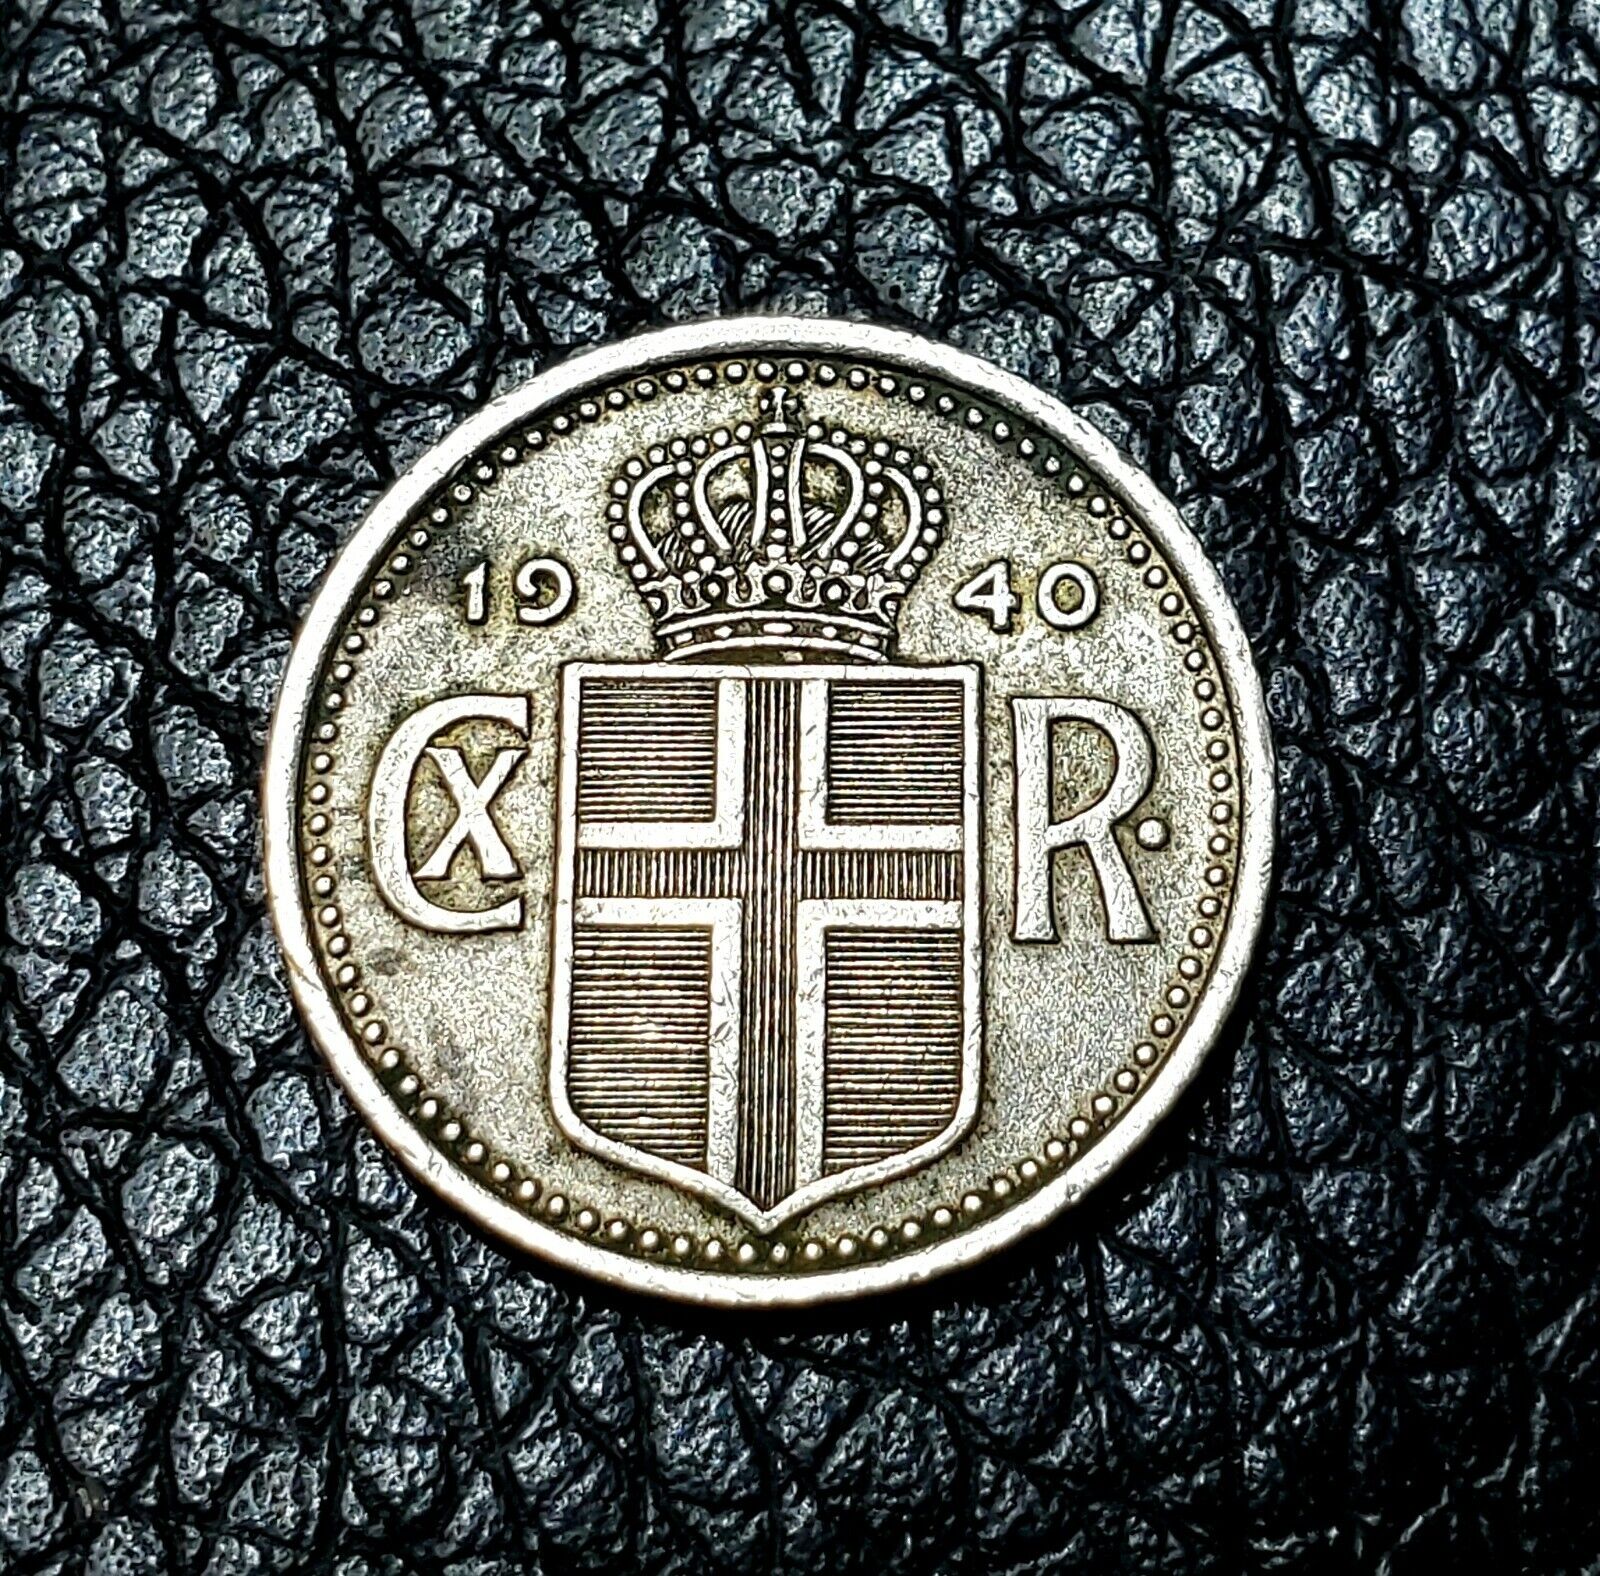 1940 ICELAND 10 AURAR Coin -